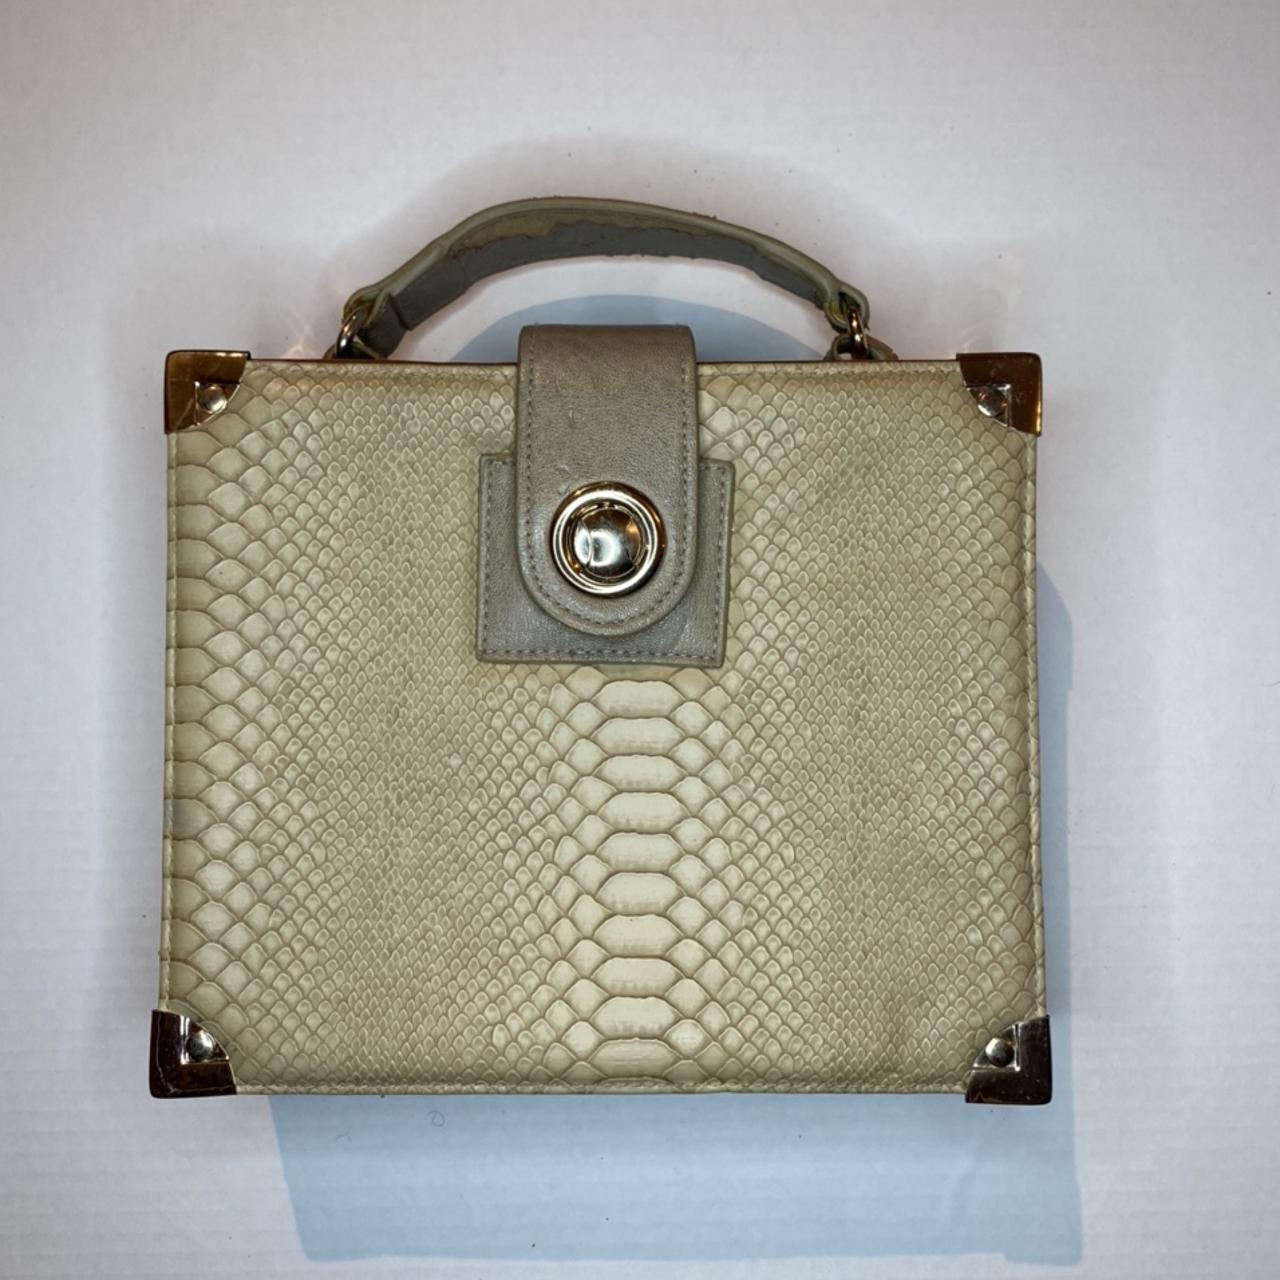 Buy Powder Blue Handbag Online at Best Price at Global Desi- 8905134714477